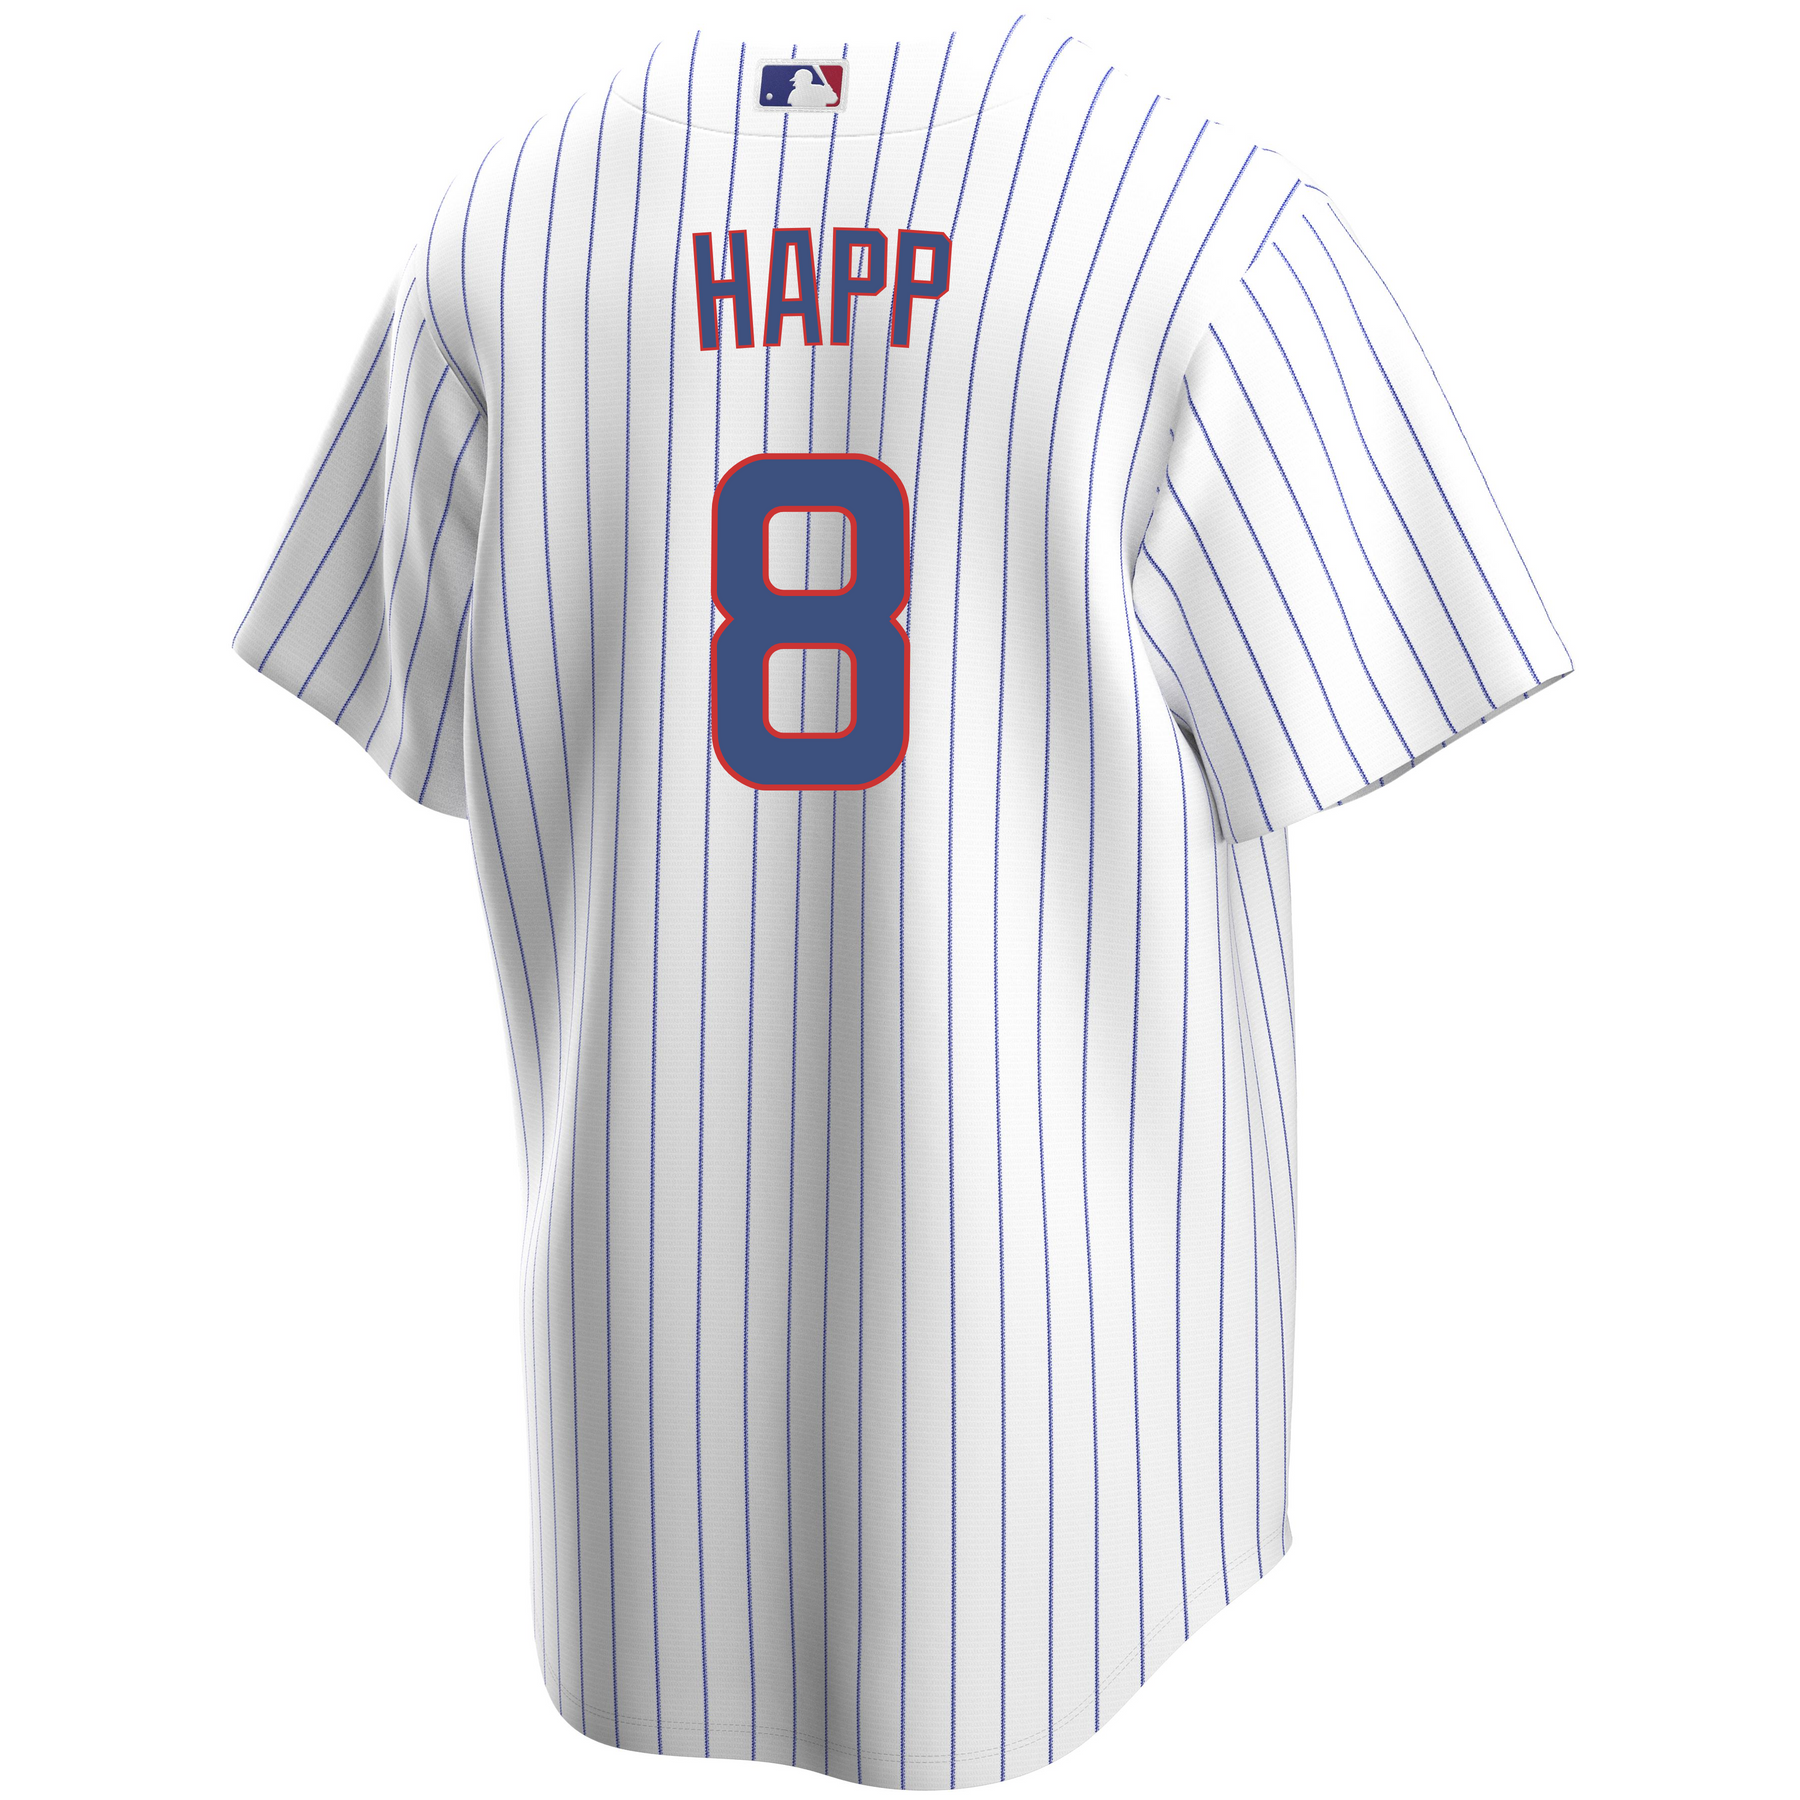 Ian Happ Jersey - Chicago Cubs Replica Adult Home Jersey